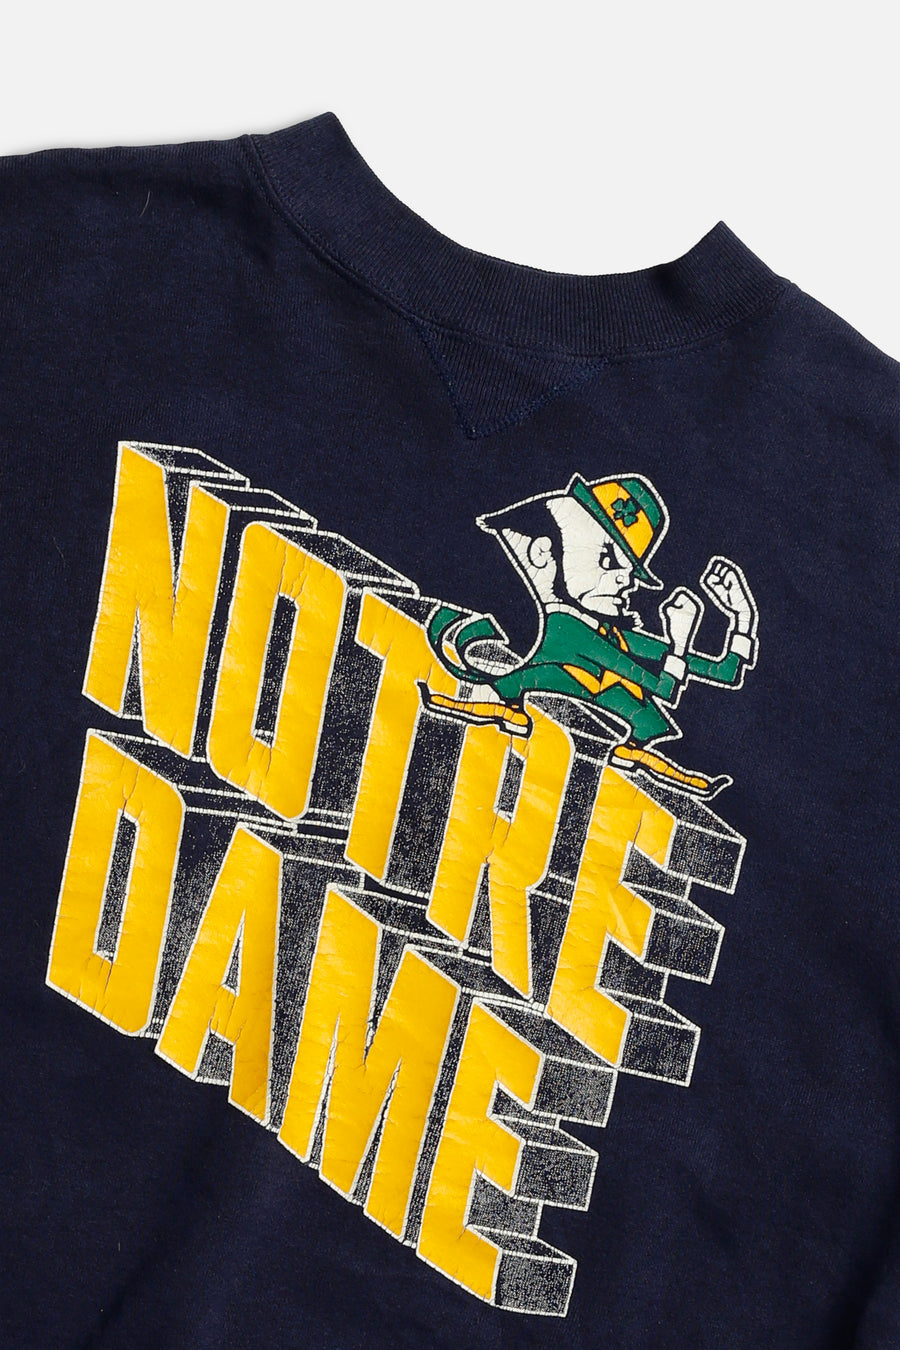 Vintage Notre Dame Sweatshirt - XL